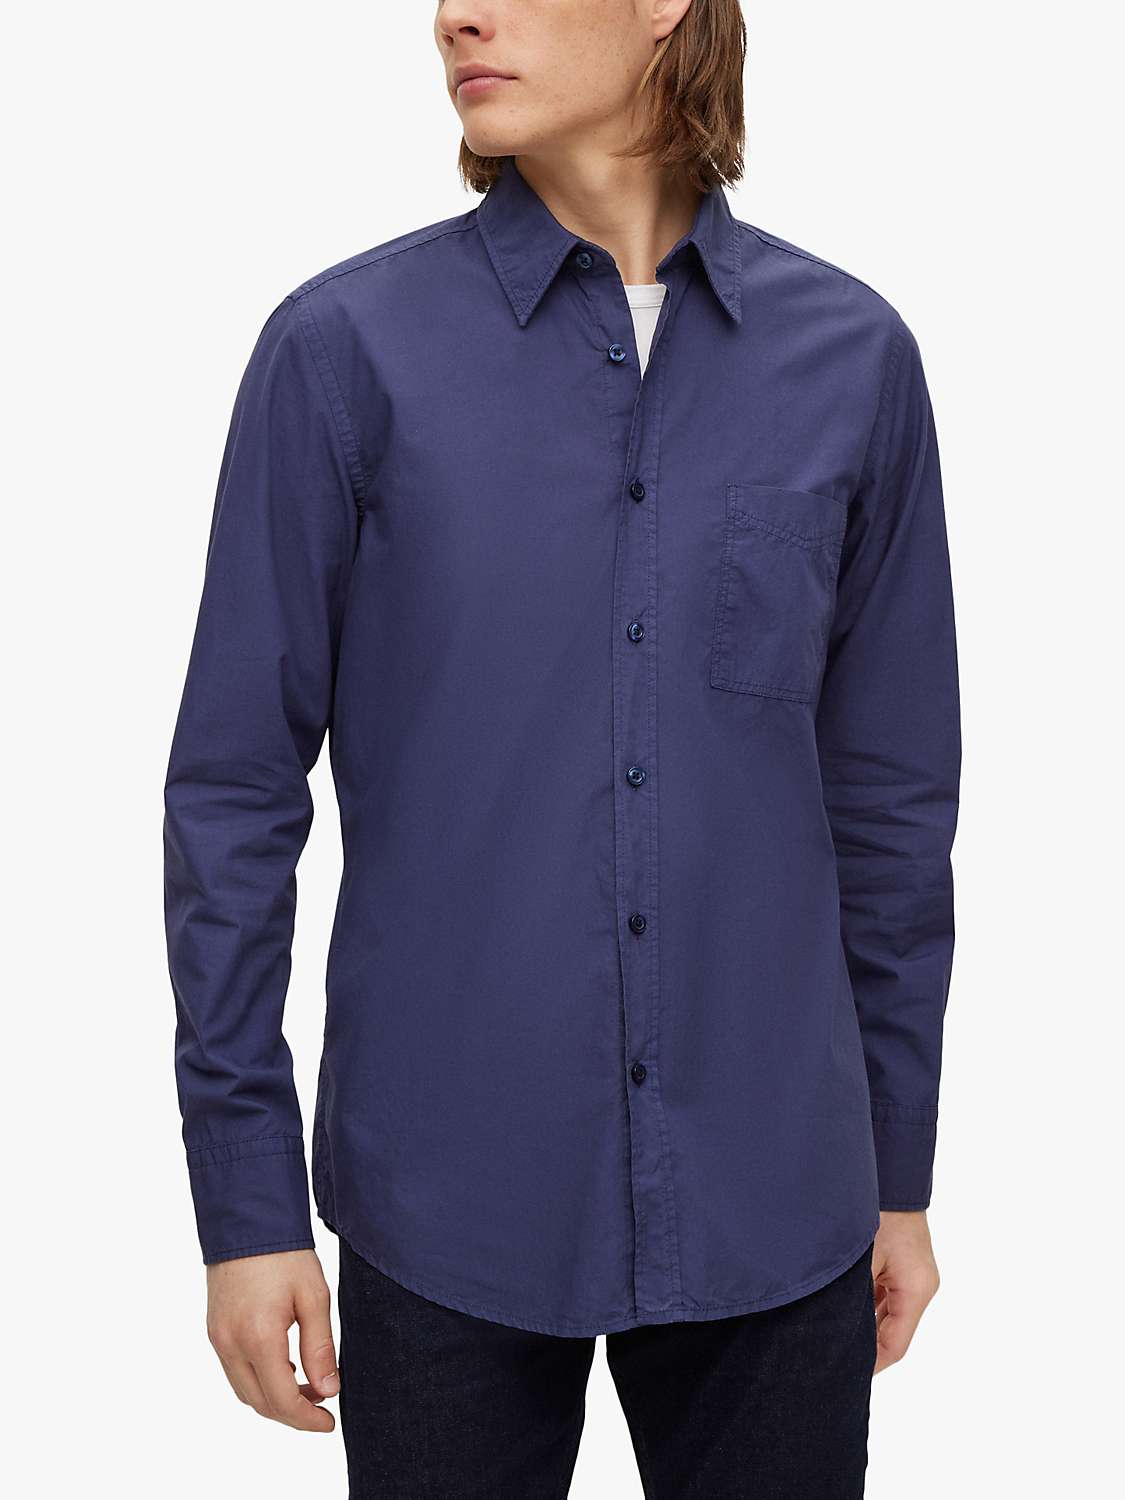 Buy BOSS Relegant Regular Fit Garment Dyed Shirt Online at johnlewis.com